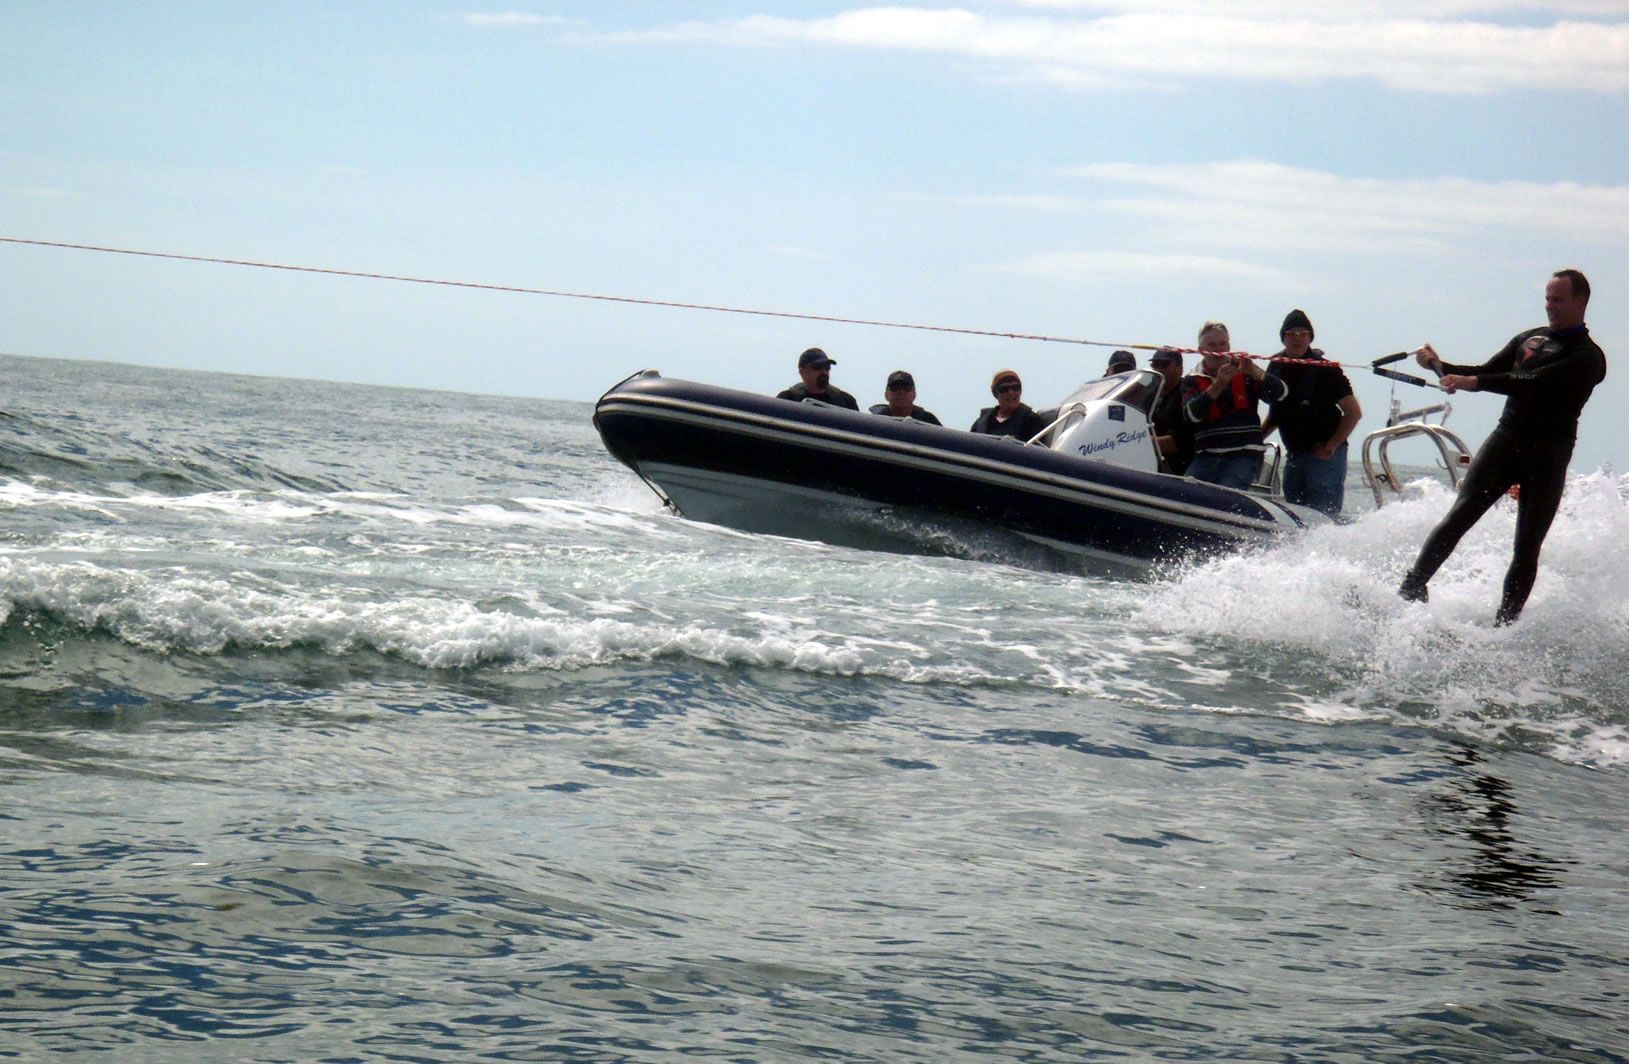 Fastest crossing of the Irish Sea on wakeboards: Irish cops set world record (Video)
